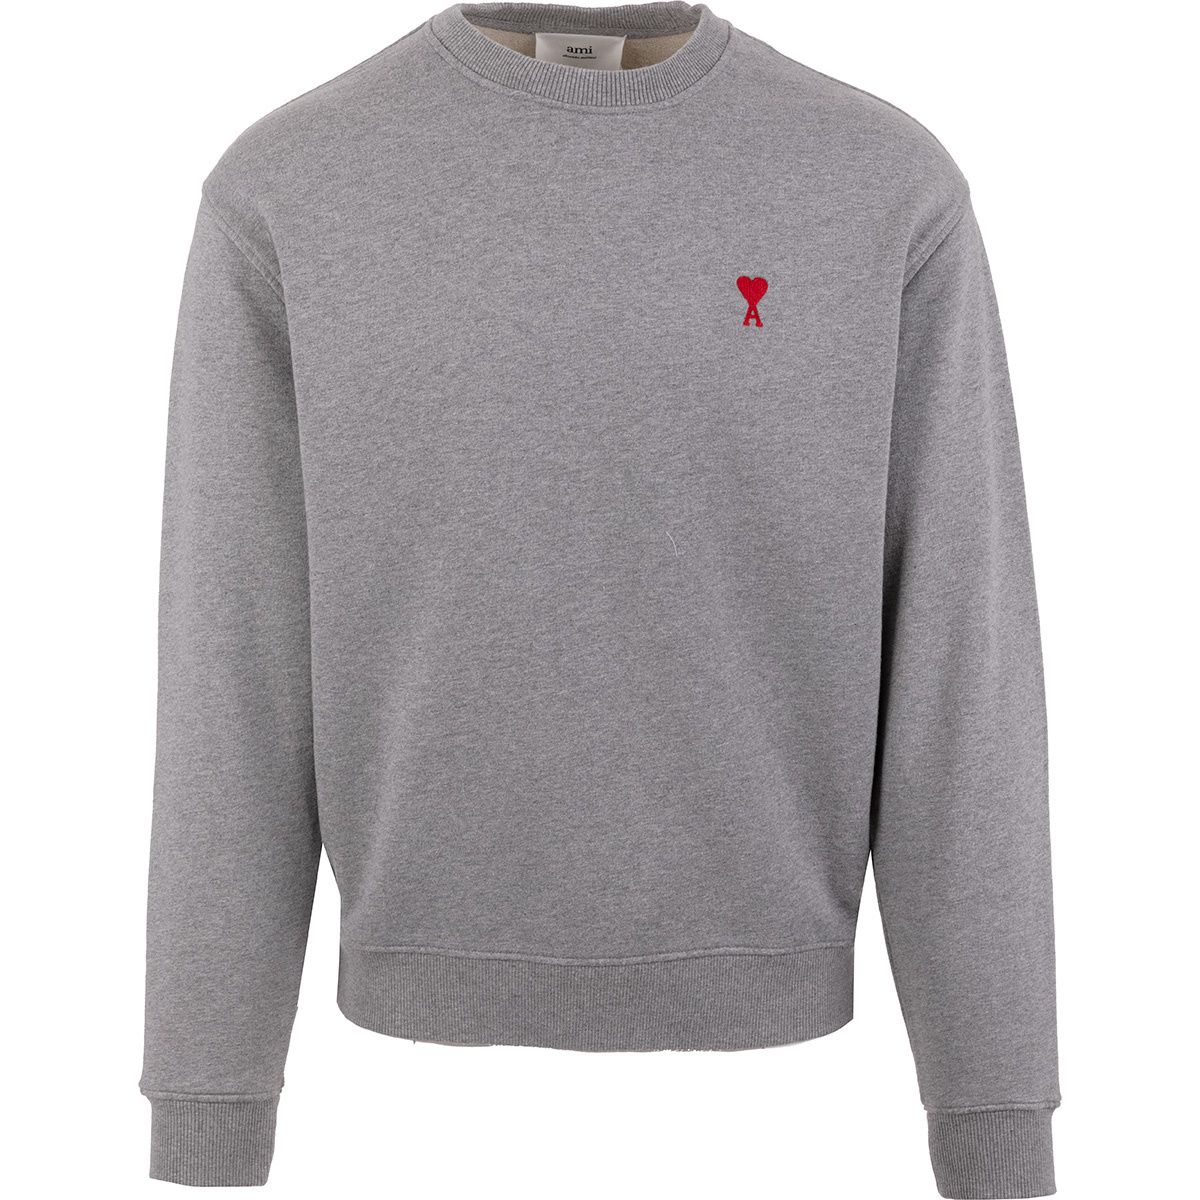 AMI - Sweatshirt heather grey - L | Oberrauch Zitt